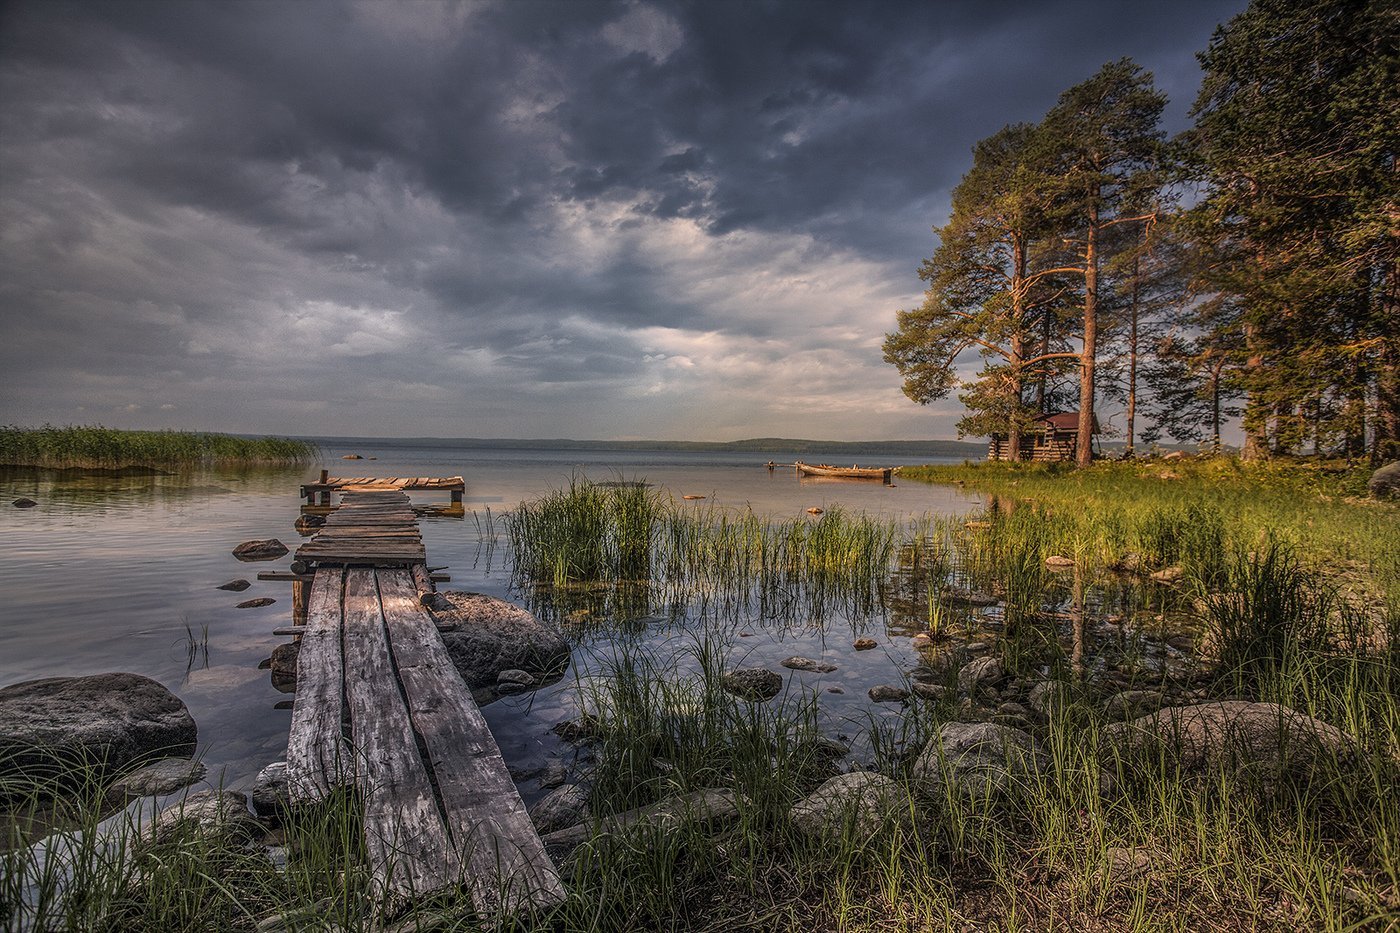 Оне озеро онежское. Озеро Онега Карелия. Онега Онежское озеро. Природа Карелии Онежское озеро. Онежское озеро Петрозаводск.